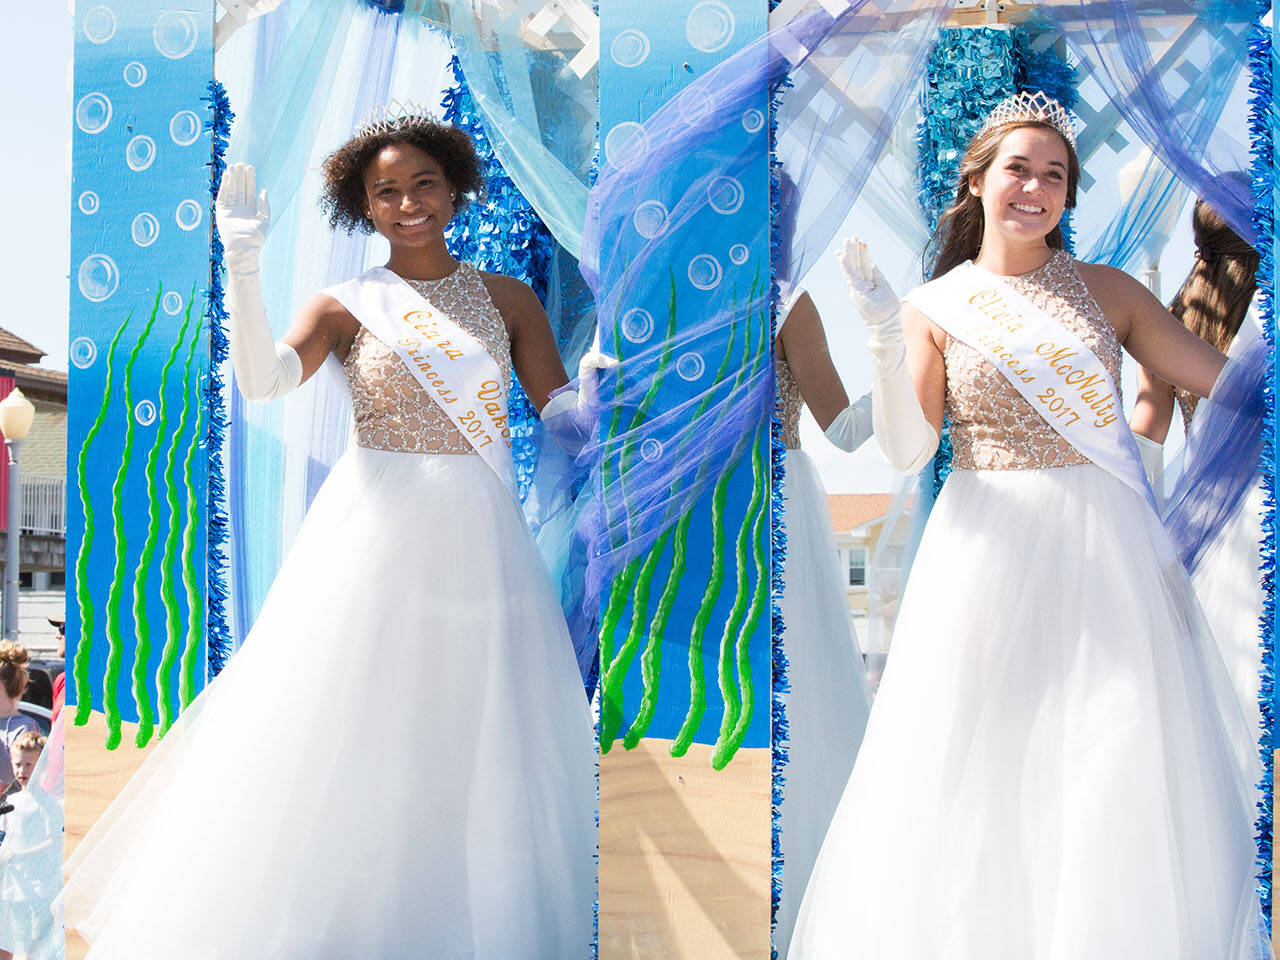 Neptune Festival Royal Court Princesses during Parade